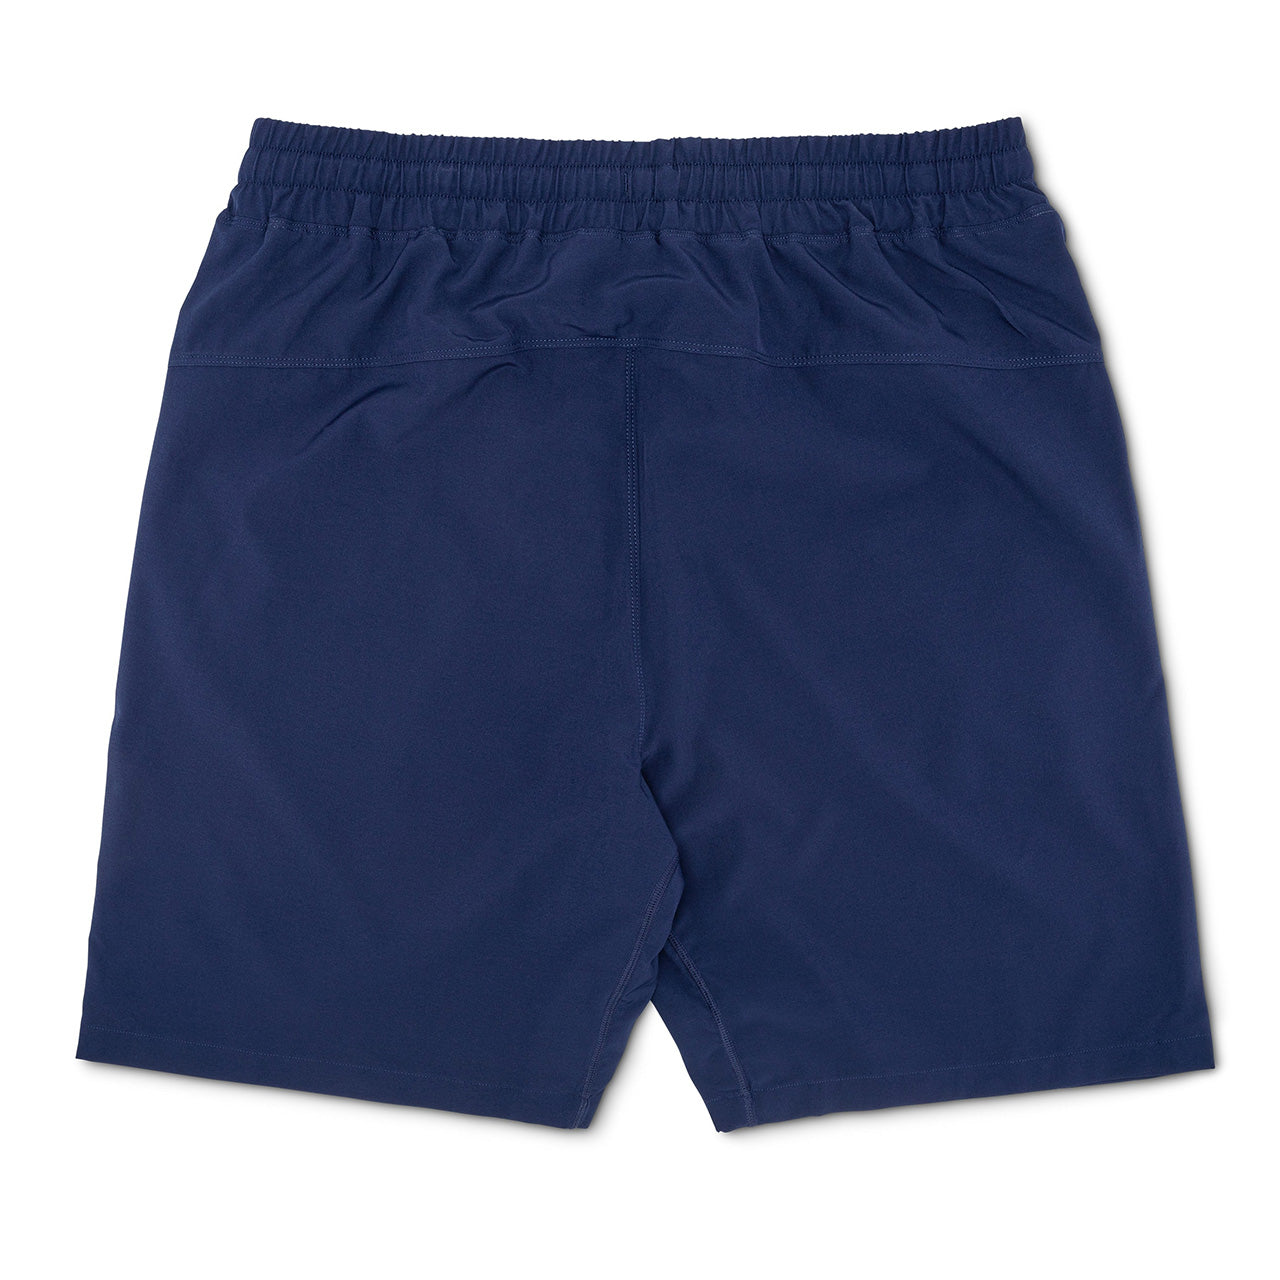 Navy Blue Athletic Shorts for Tall Slim Men